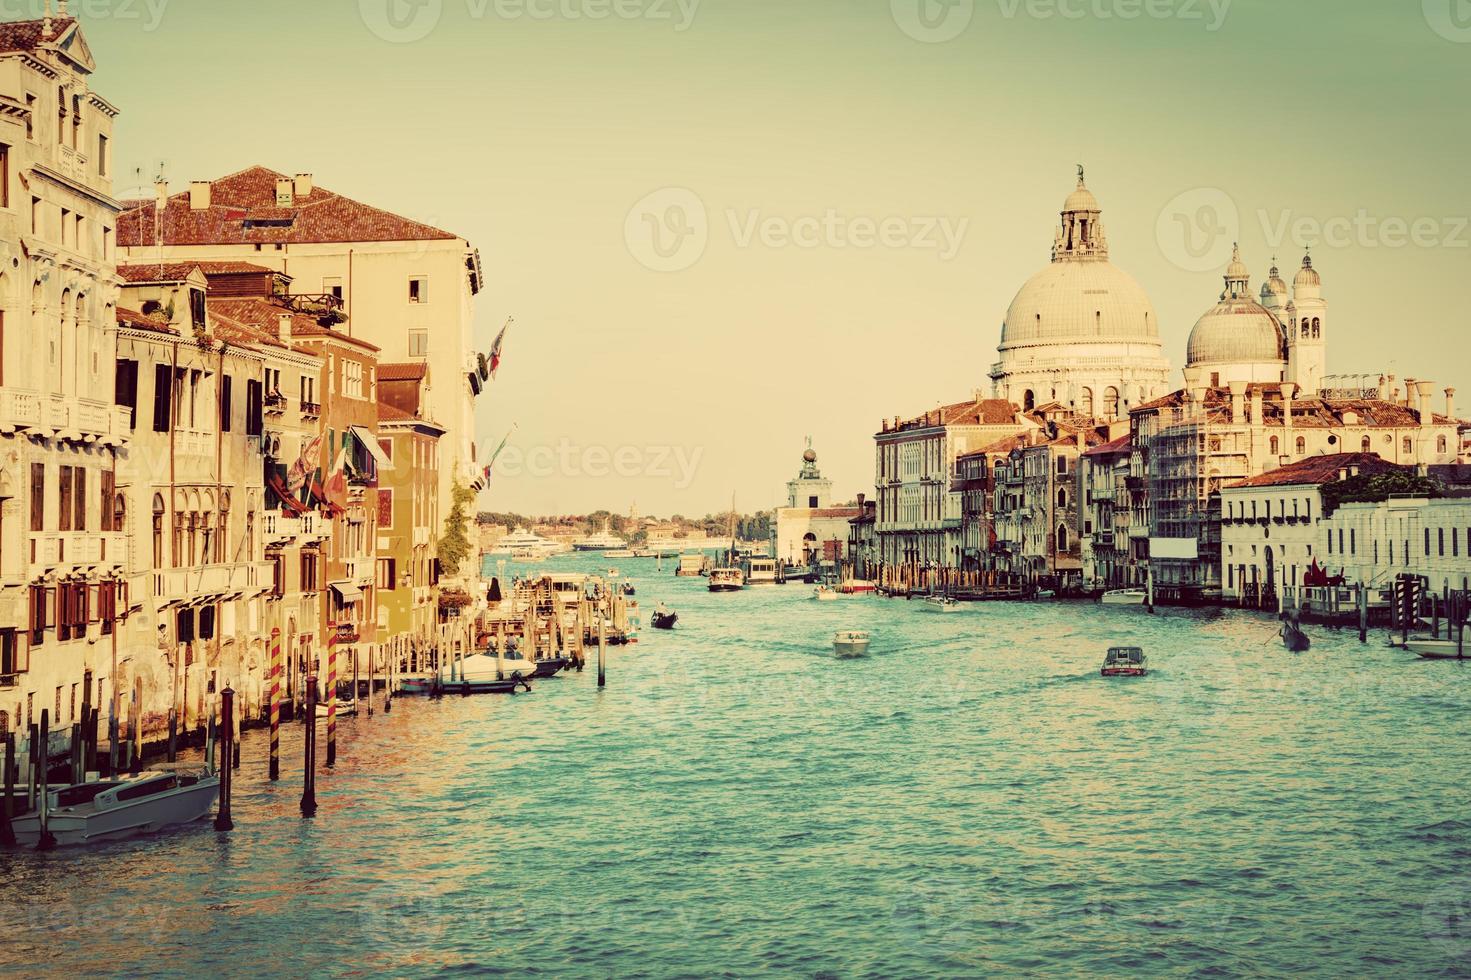 Venetië, Italië. Grand Canal en de basiliek Santa Maria della Salute. vintage foto